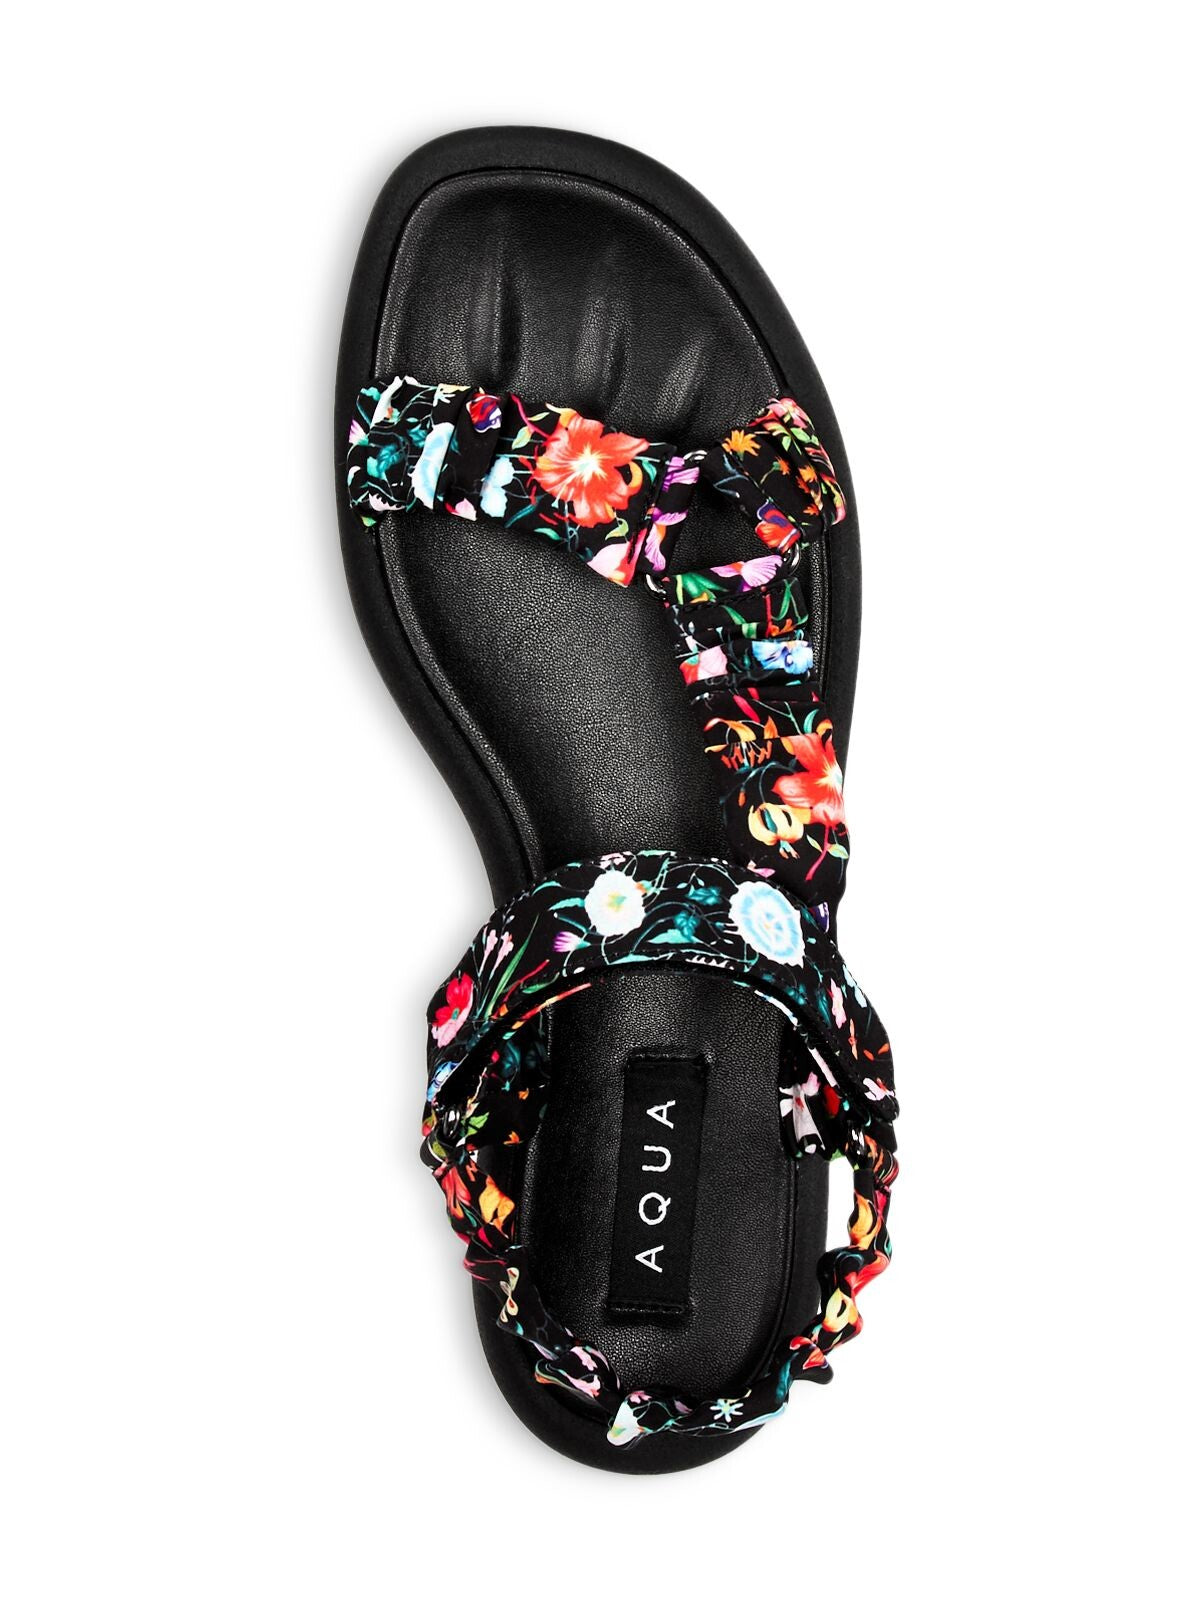 AQUA Womens Black Floral Adjustable Strap Cushioned Tenly Square Toe Platform Sandals 7 M